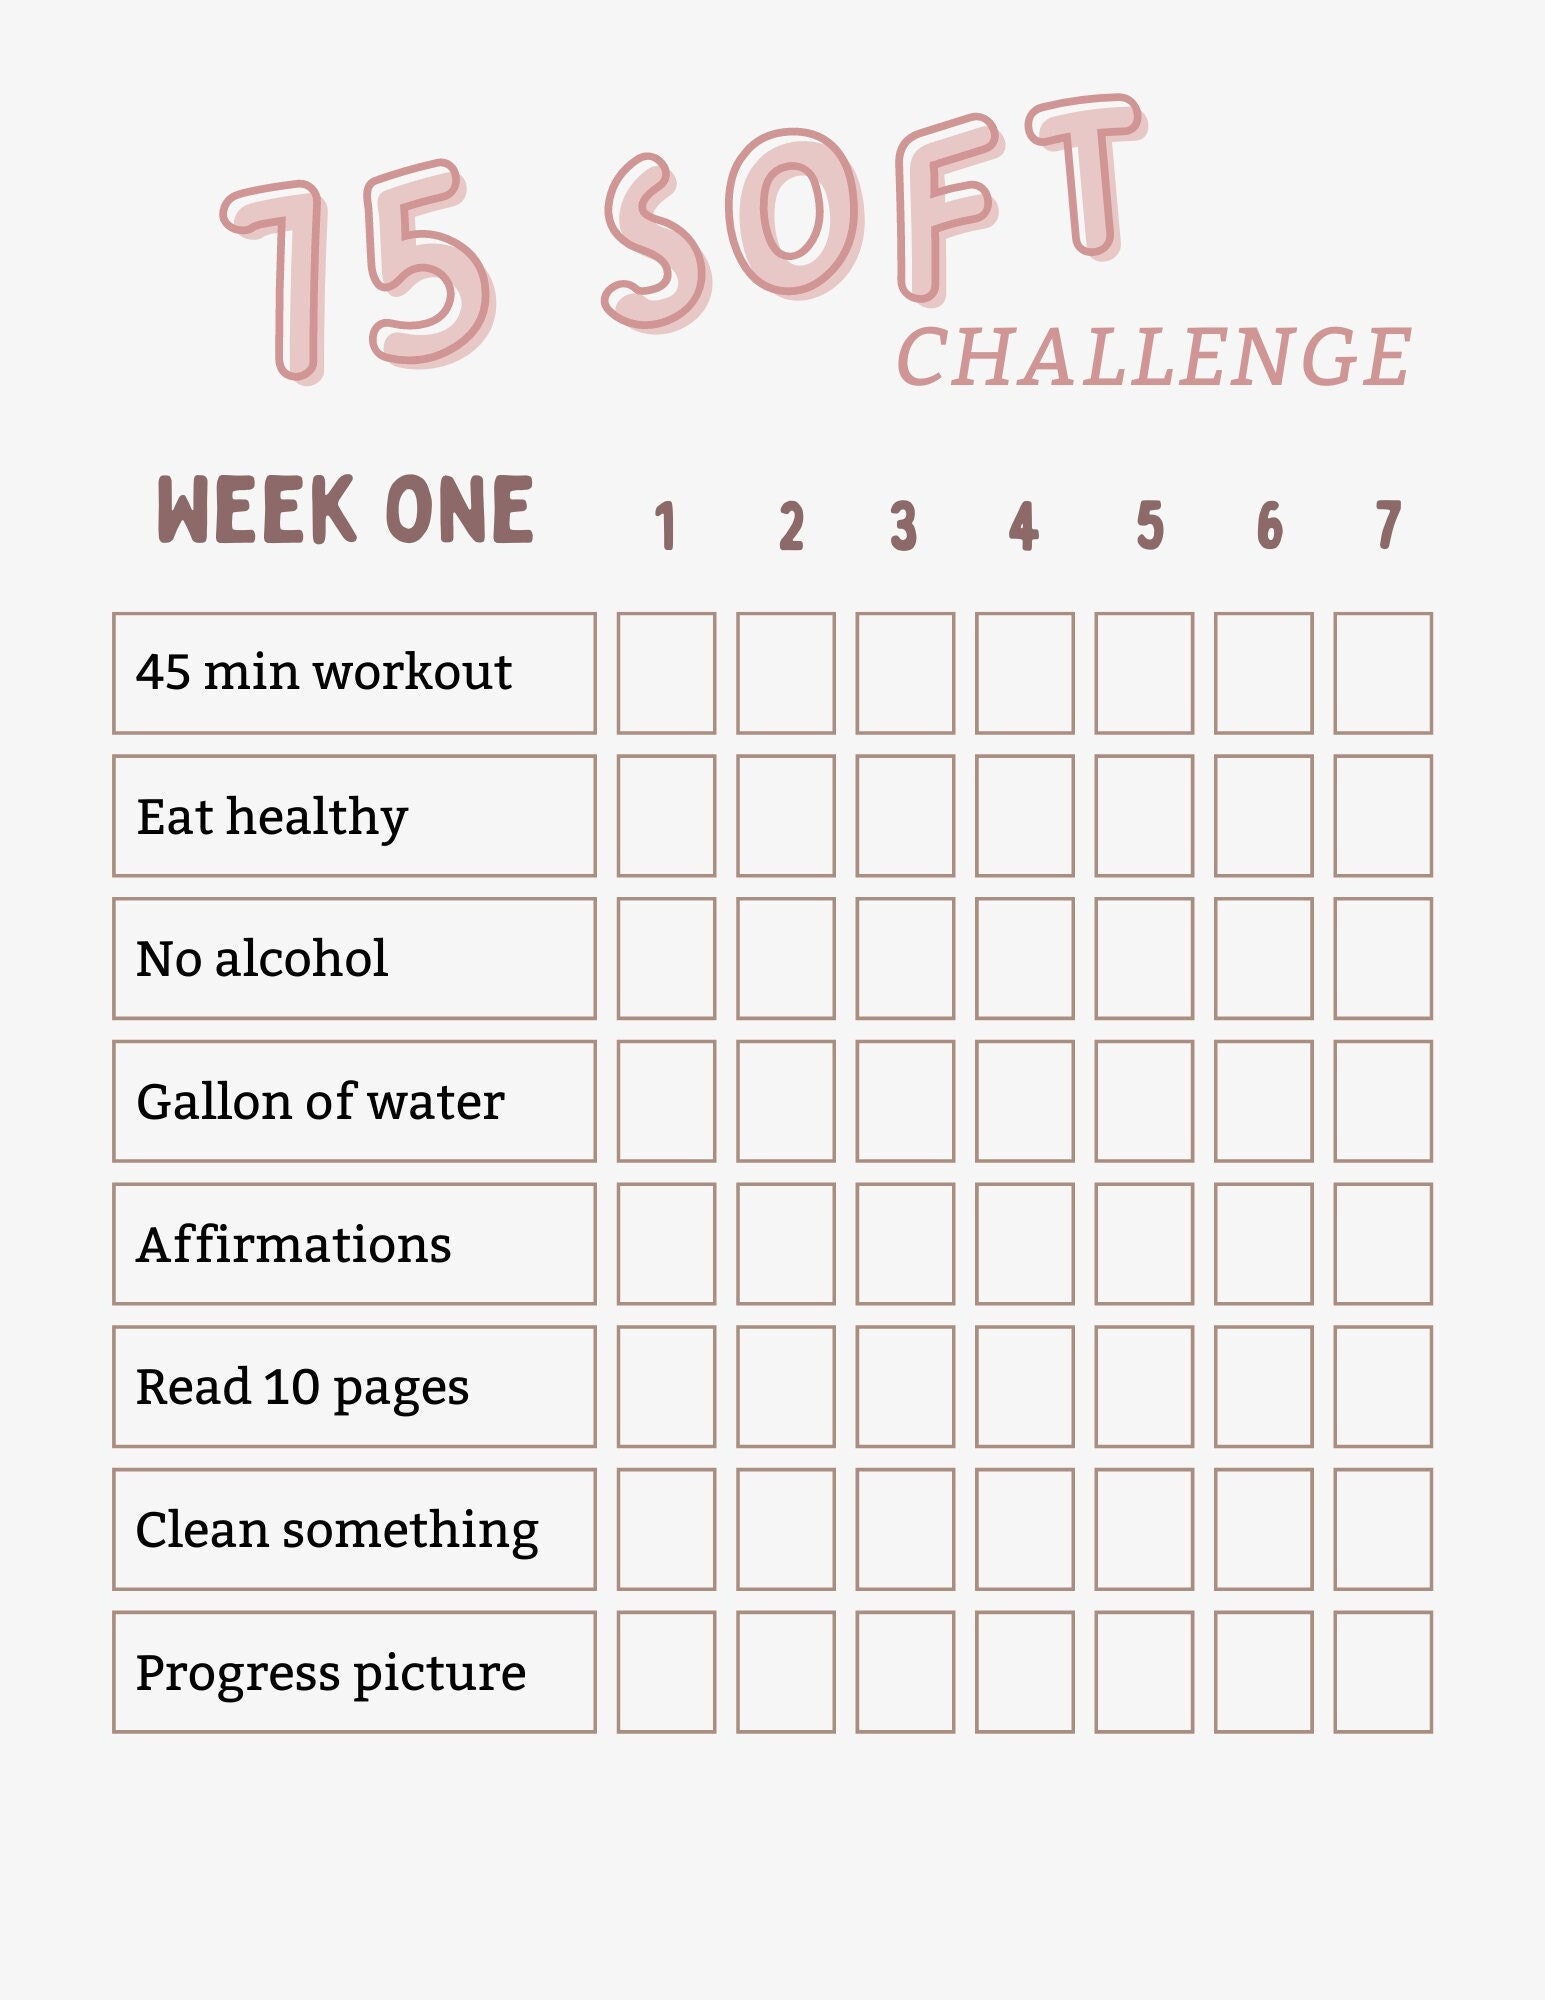 75-soft-challenge-checklist-daily-habit-tracker-digital-etsy